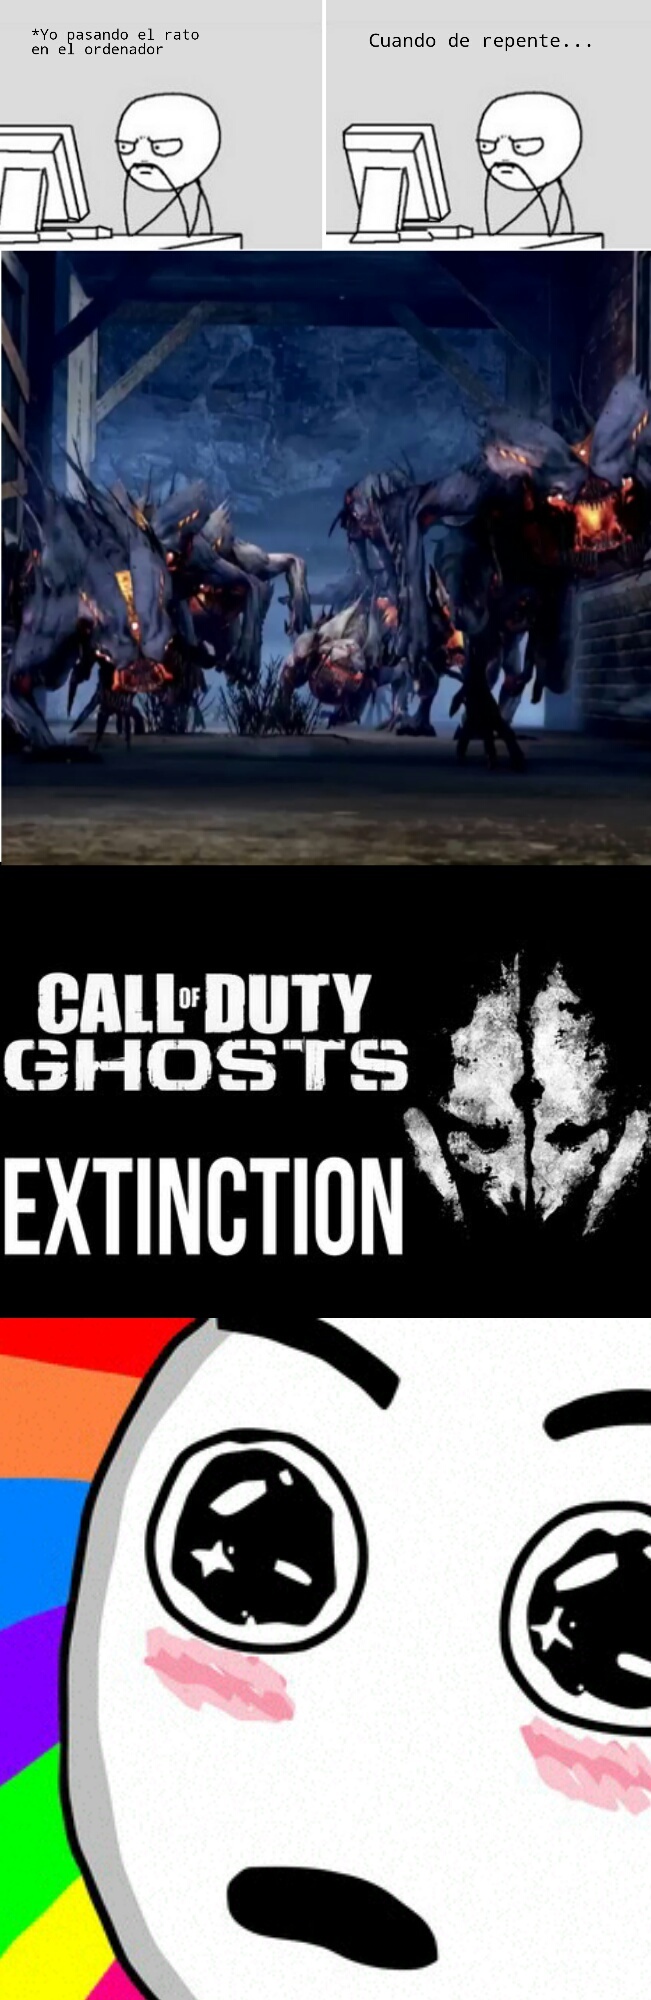 cod ghosts extinction meme